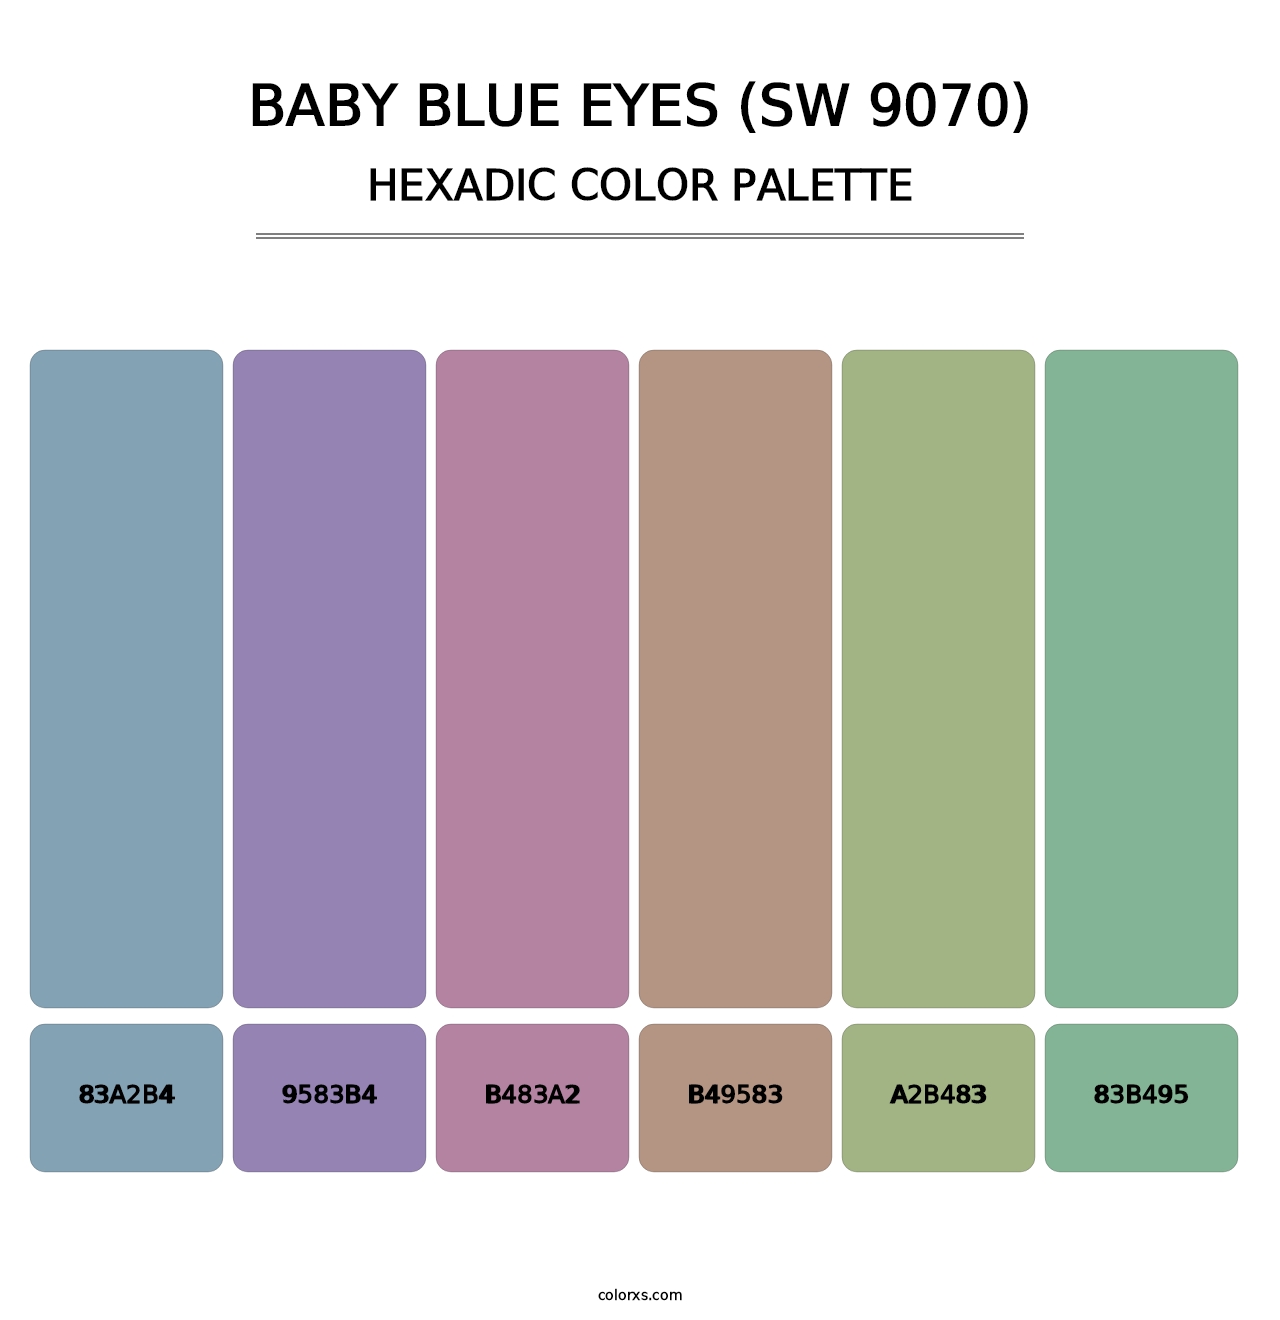 Baby Blue Eyes (SW 9070) - Hexadic Color Palette